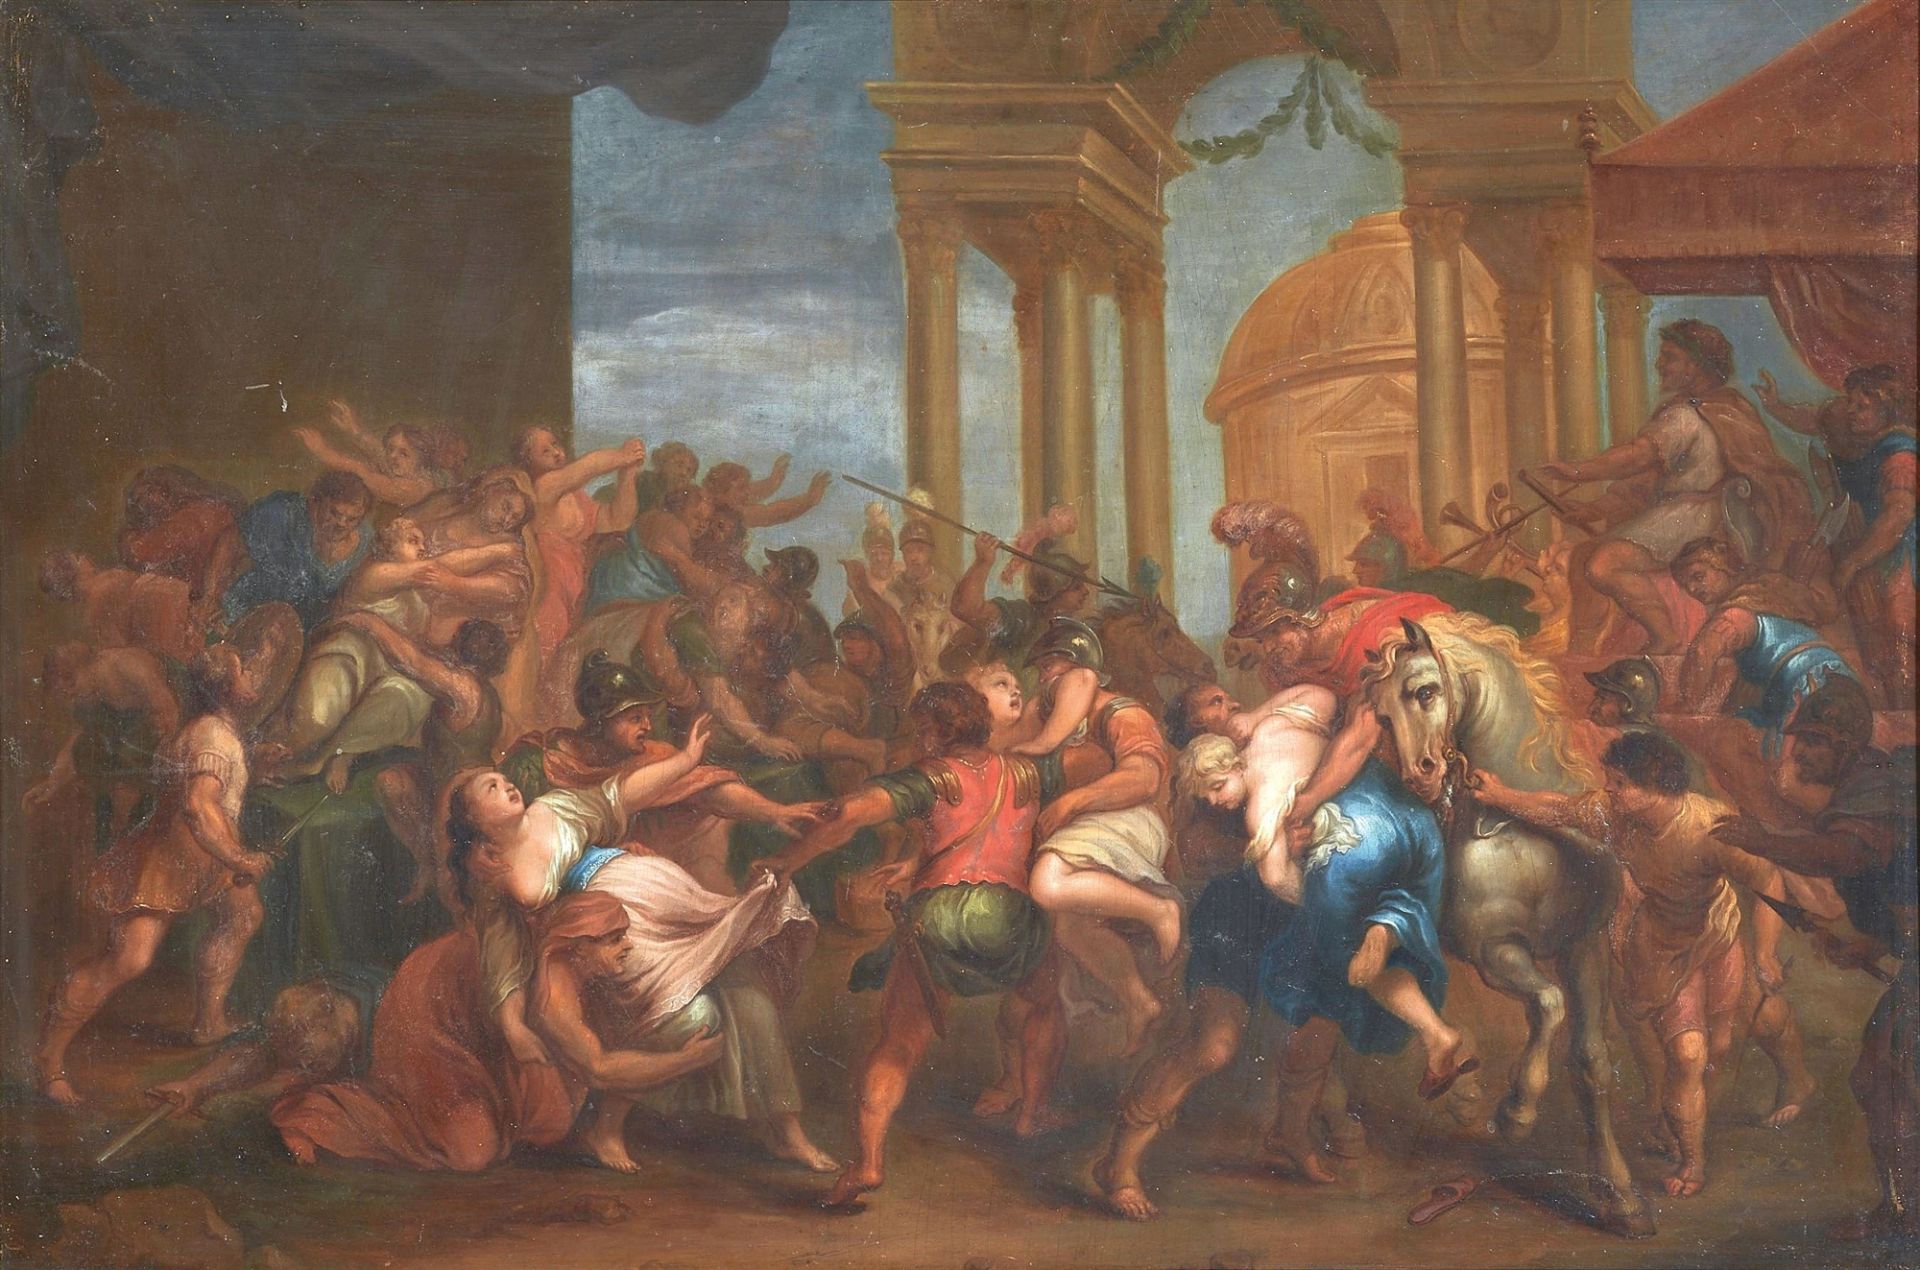 Peter Paul Rubens, copy after, The Rape of the Sabine Women